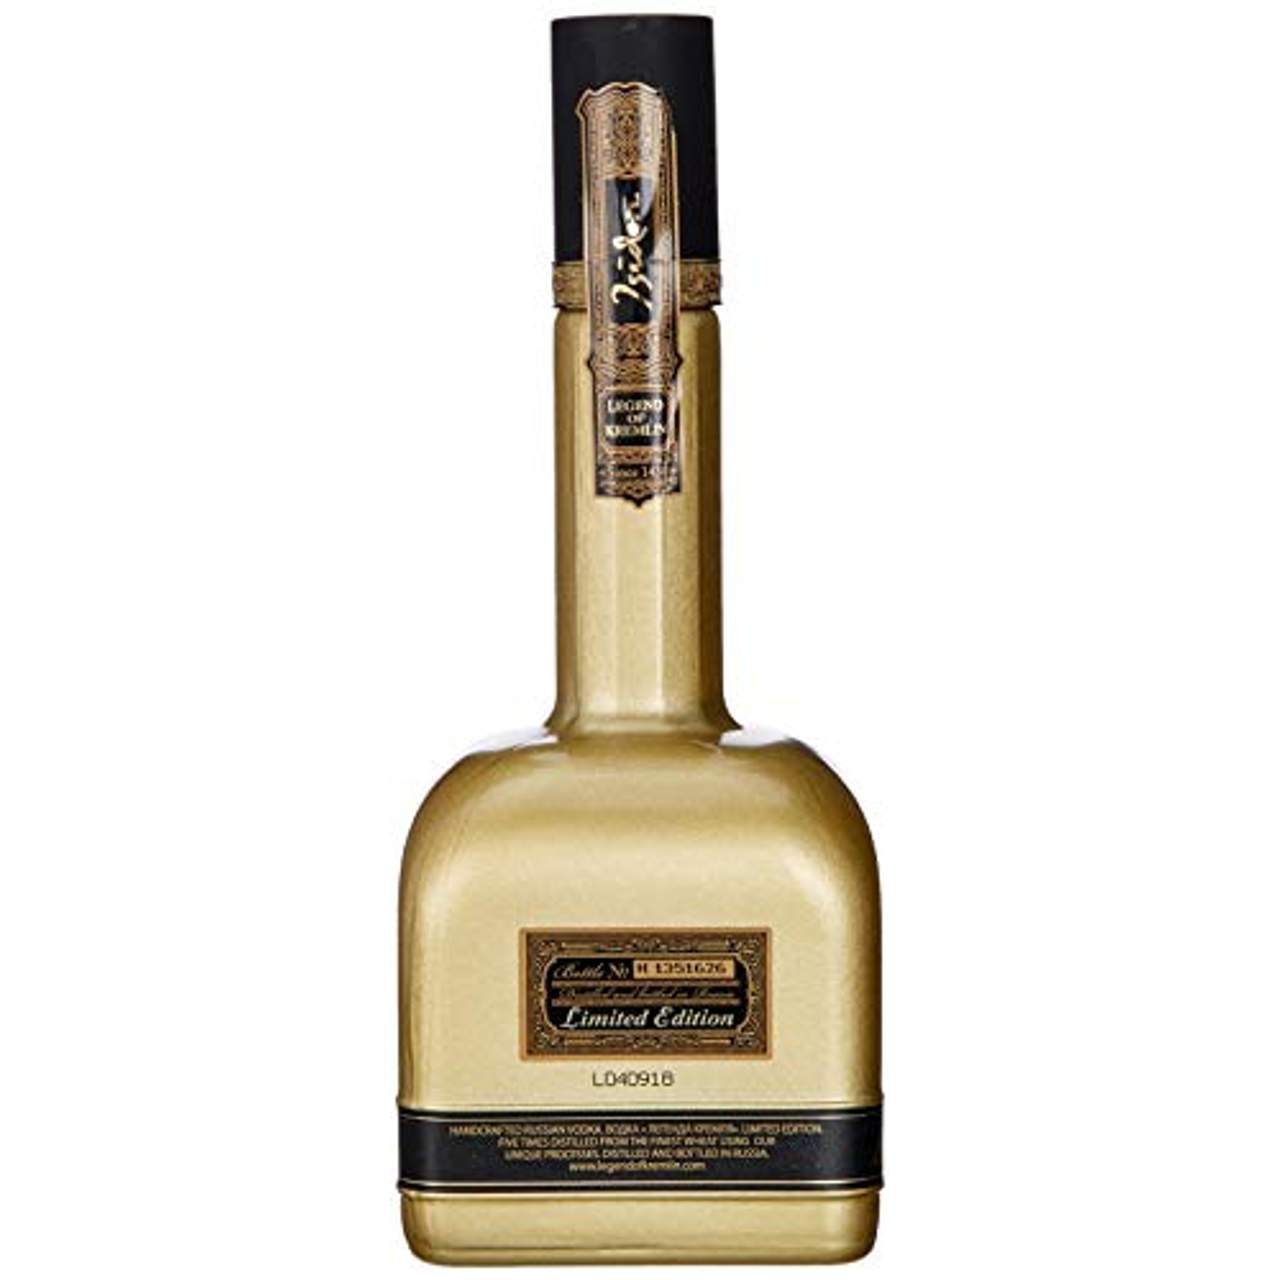 Legend of Kremlin Russian Vodka de Luxe Gold Limited Edition